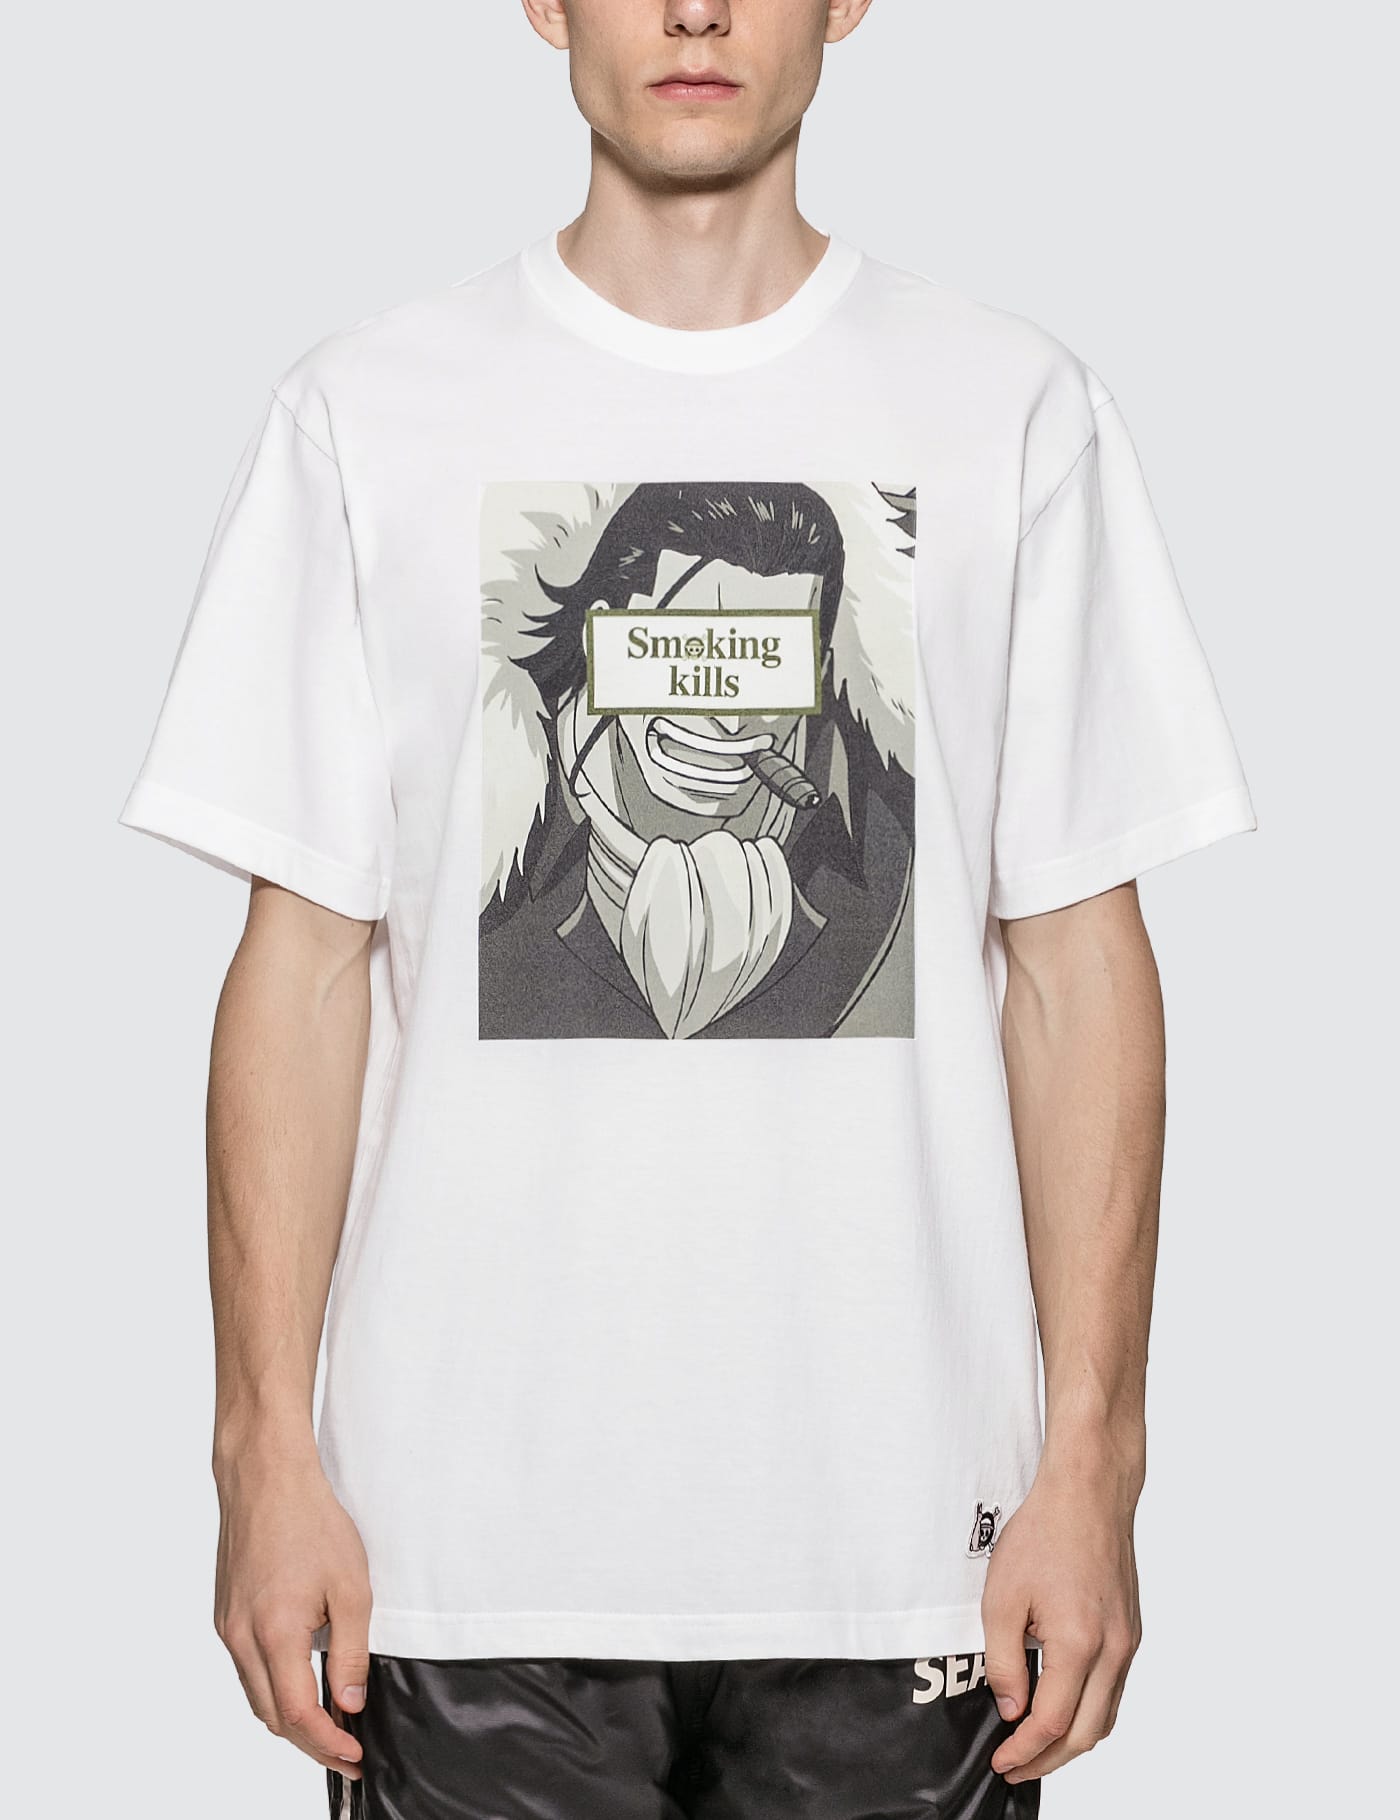 FR2 - #FR2 X One Piece Crocodile Smokers T-shirt | HBX - Globally